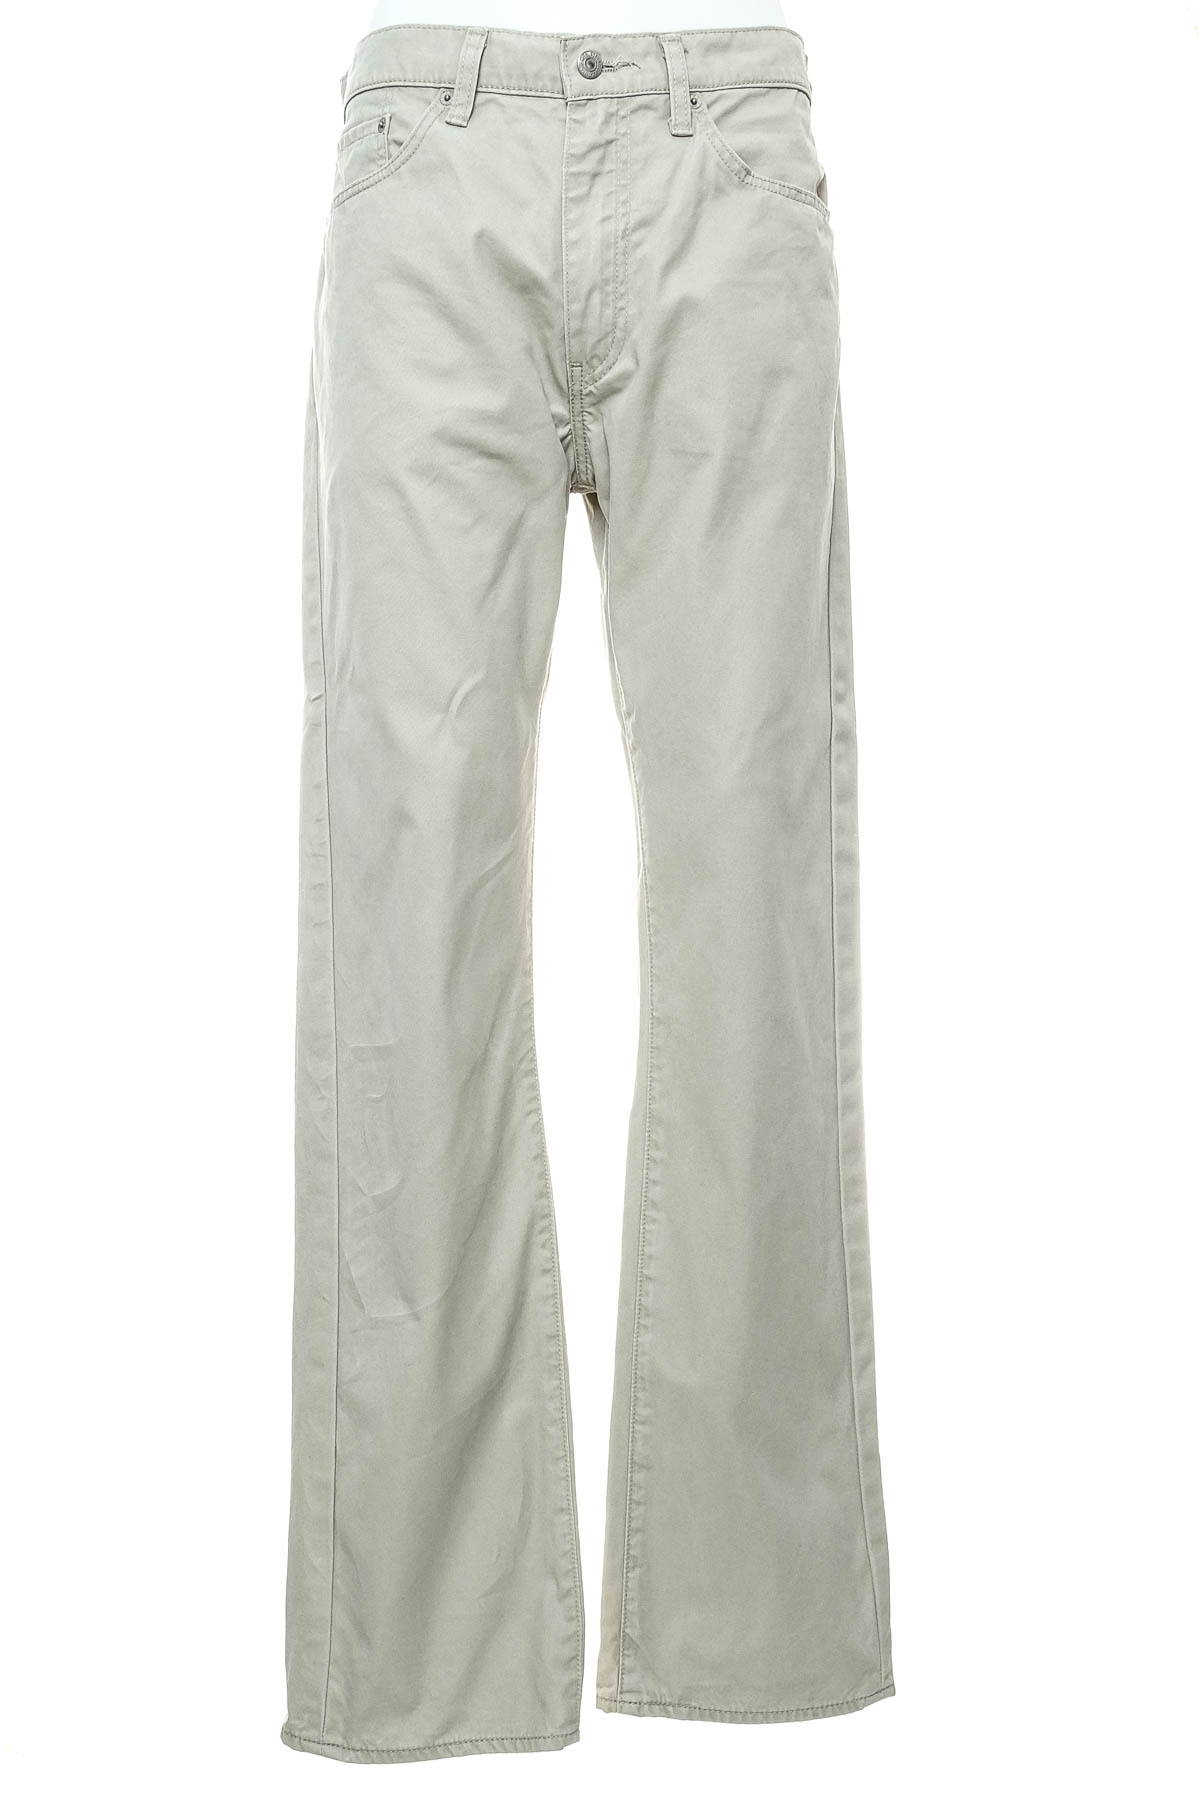 Men's trousers - Levi Strauss & Co. - 0